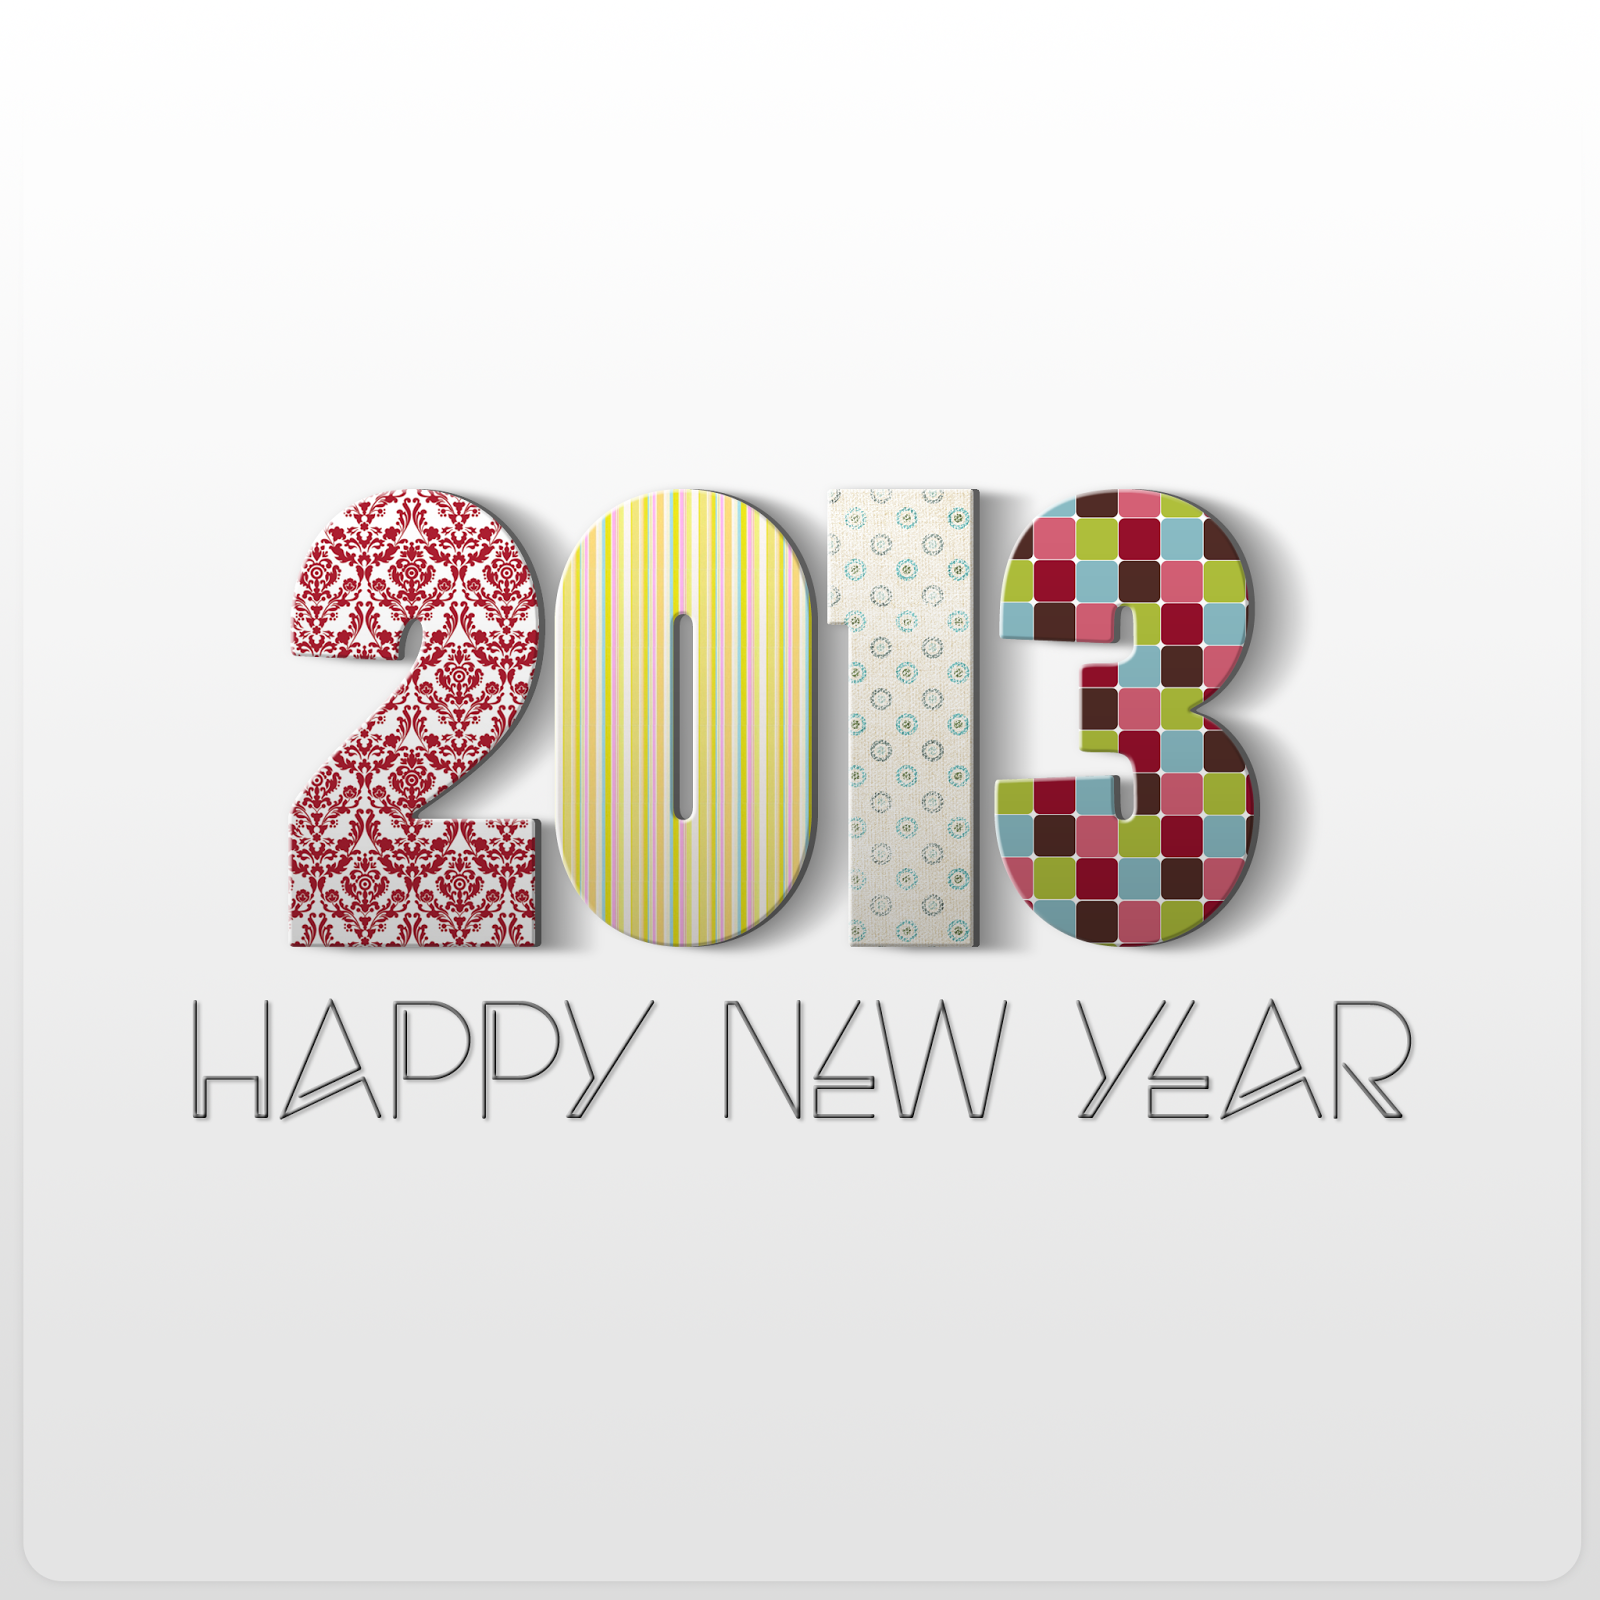 New Year Wallpaper Free Download For Desktop